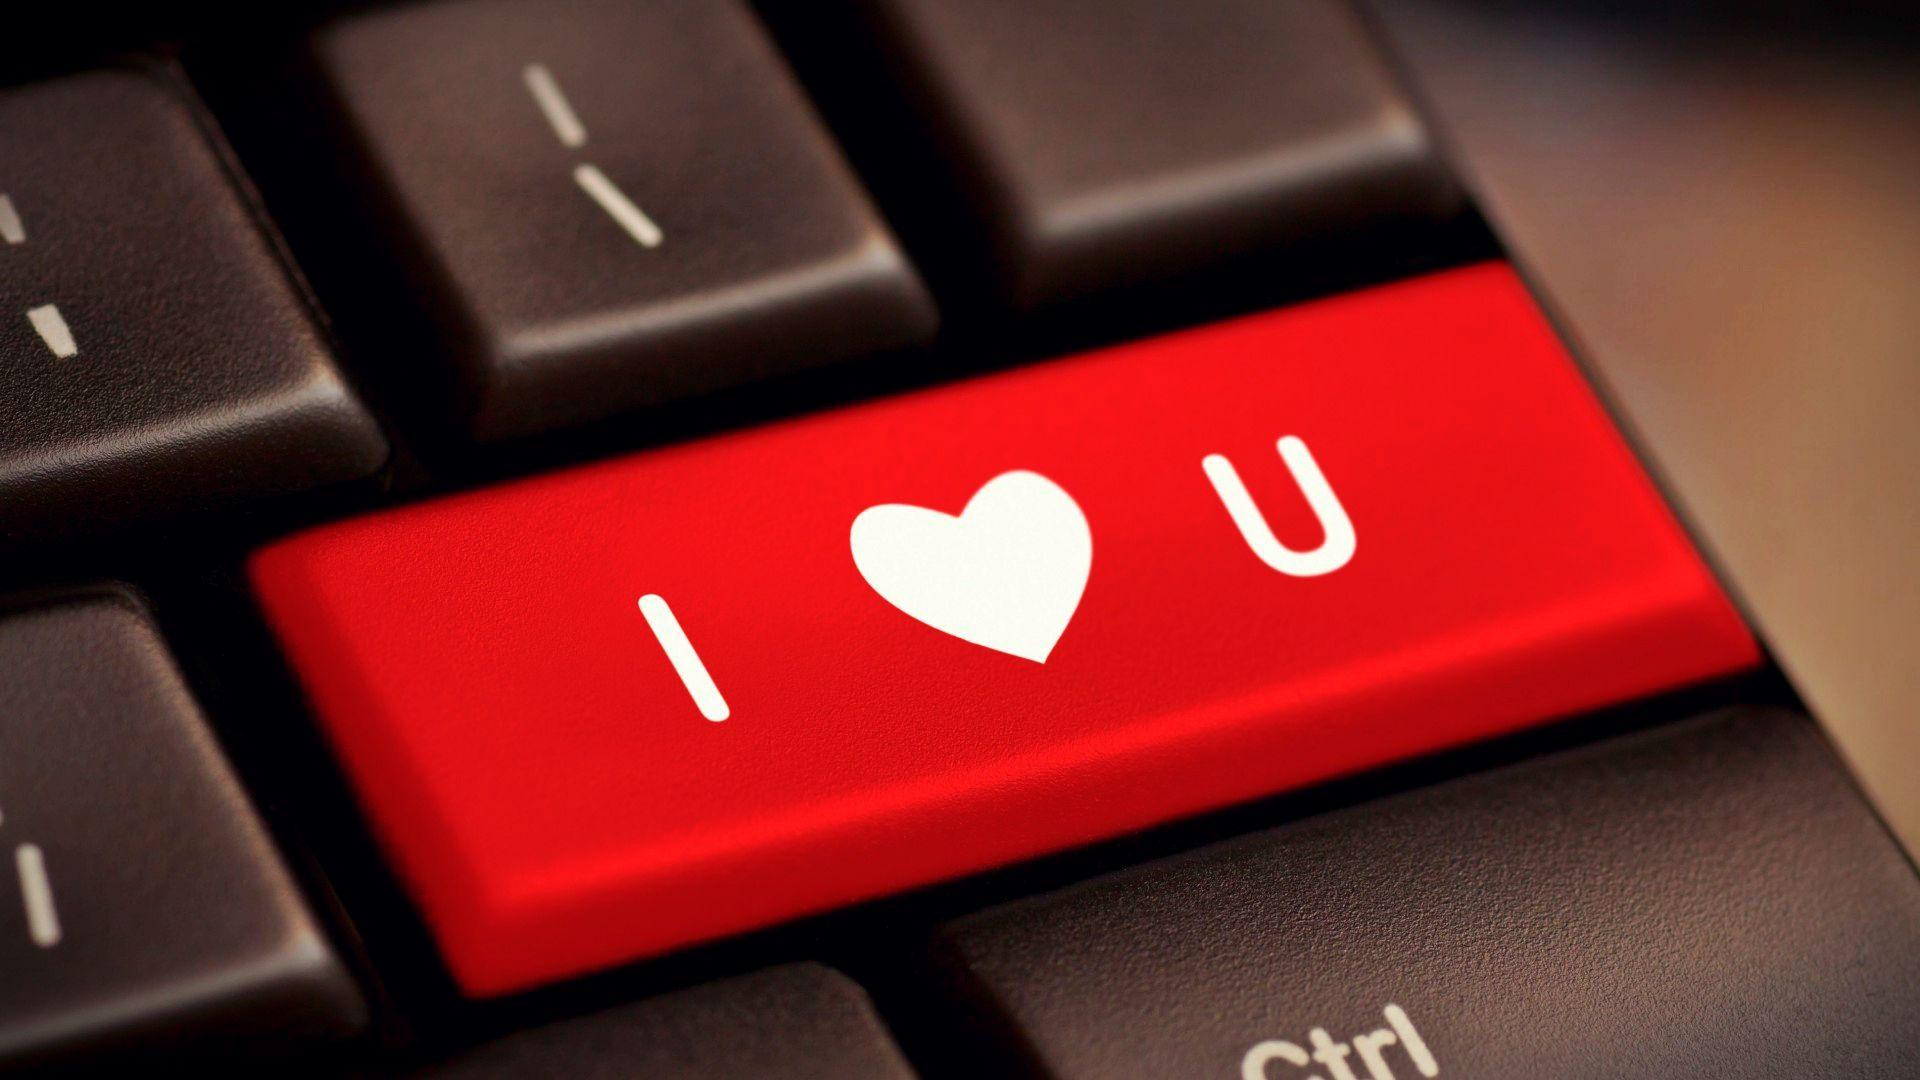 Love i Love You He Loves You wallpaper Desktop, Phone, Tablet